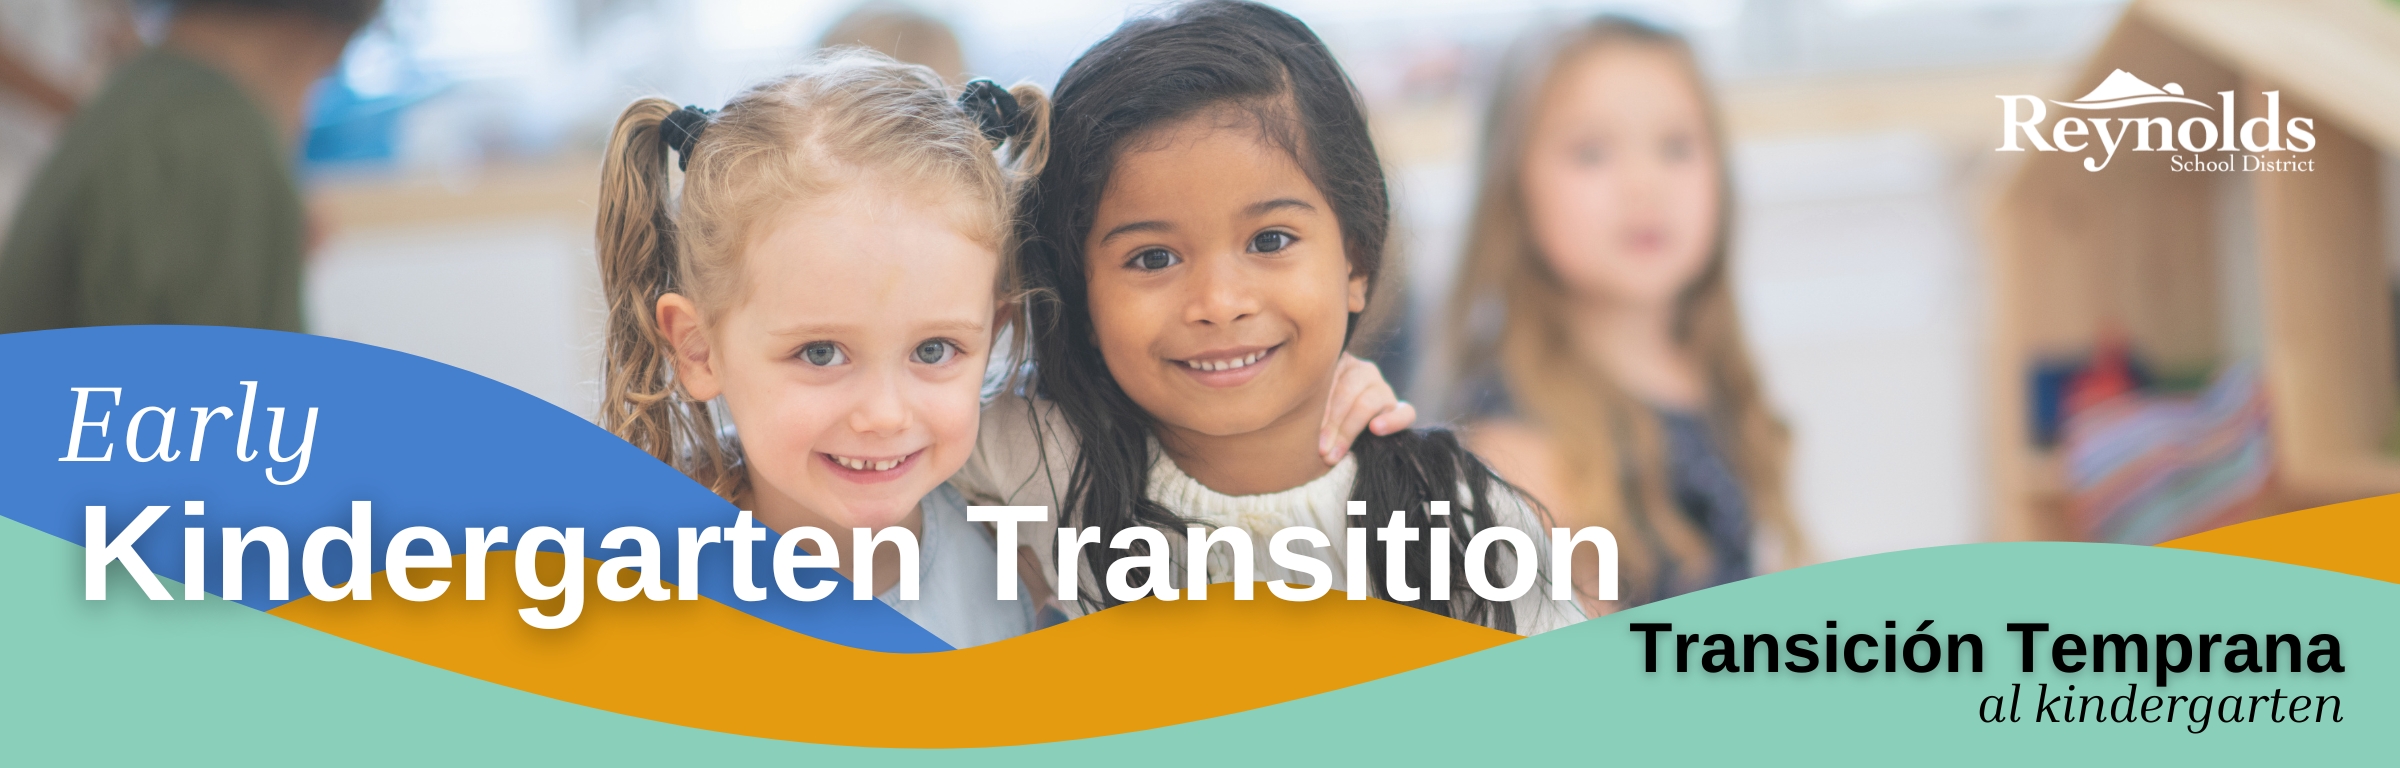 Early Kindergarten Transition Header